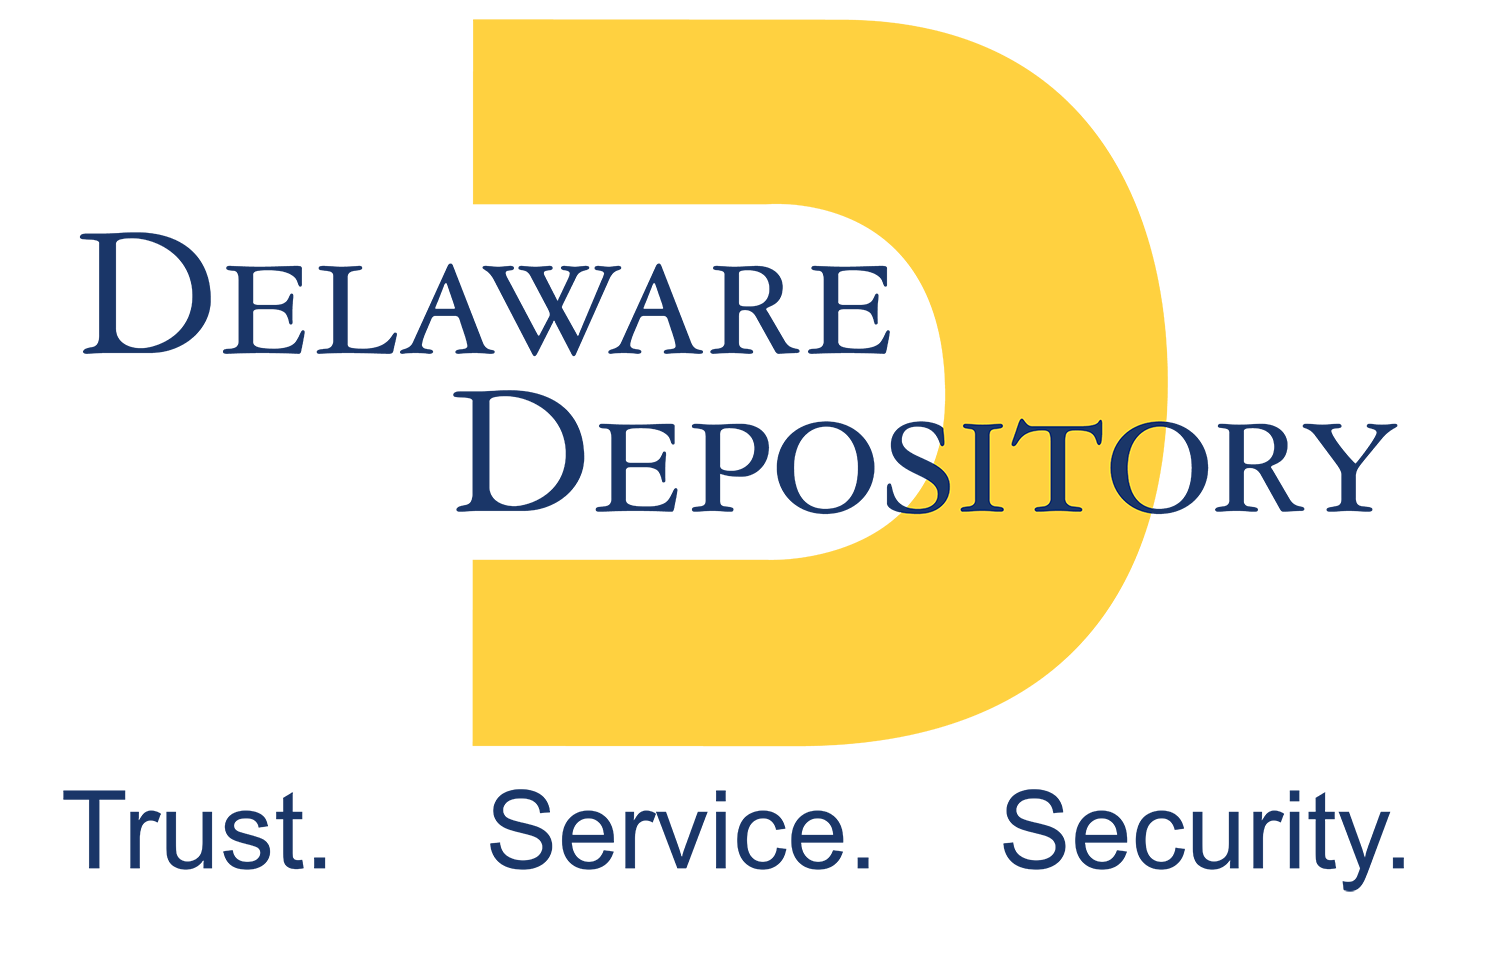 Delaware Depository Logo